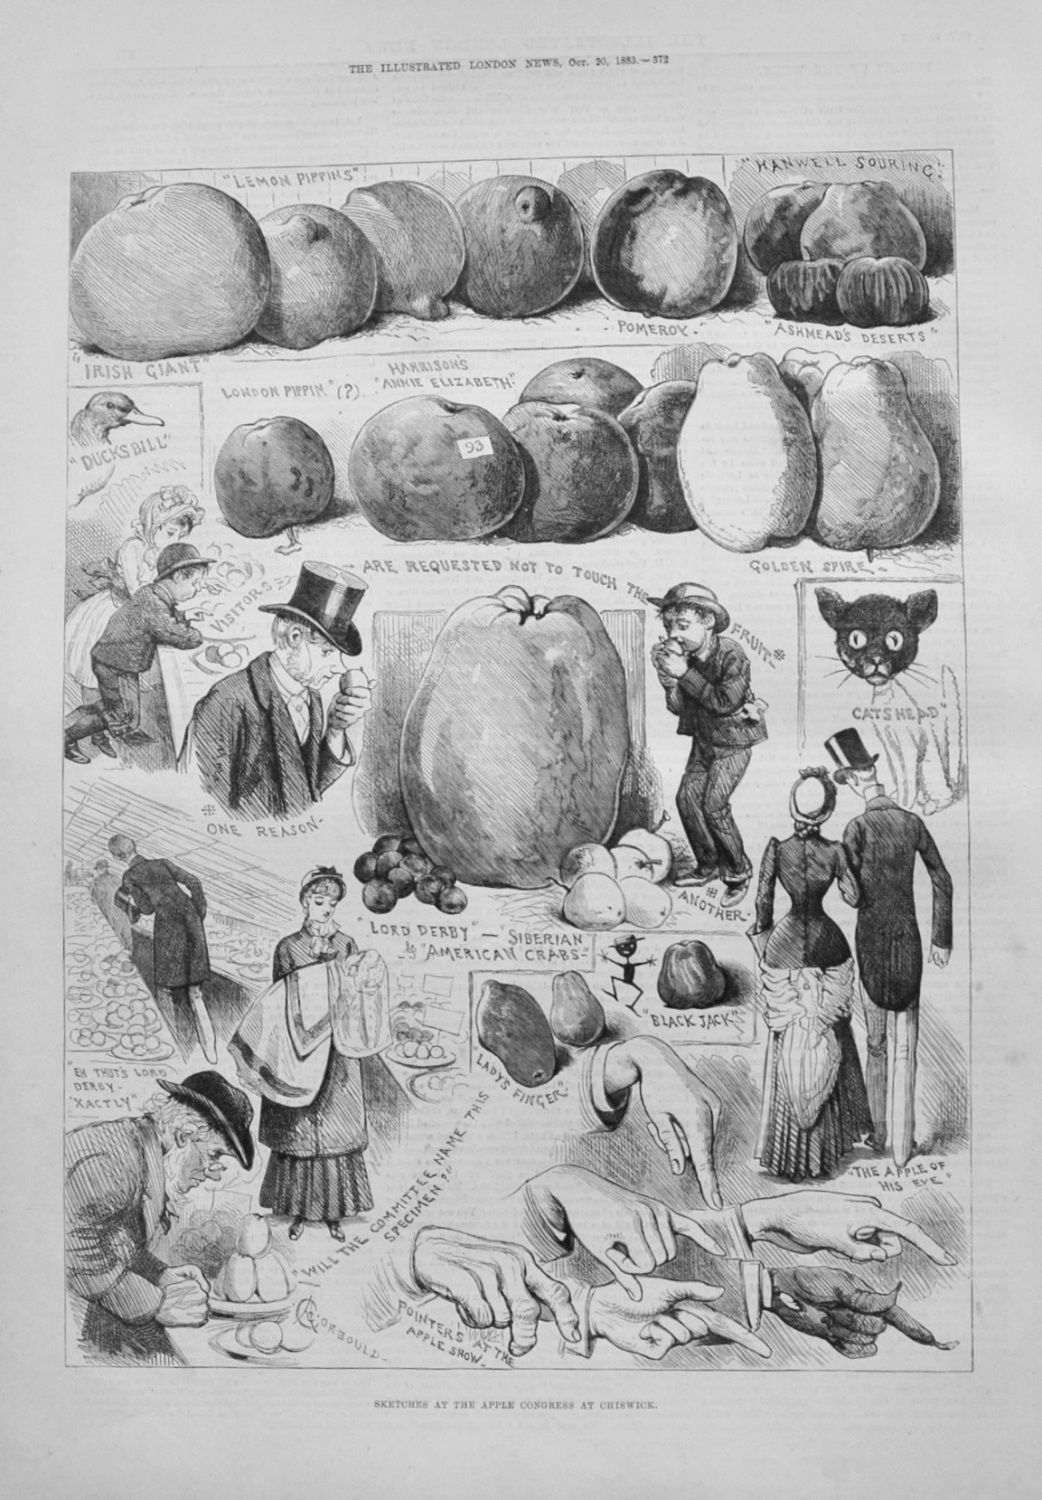 Apple Congress at Chiswick - 1883